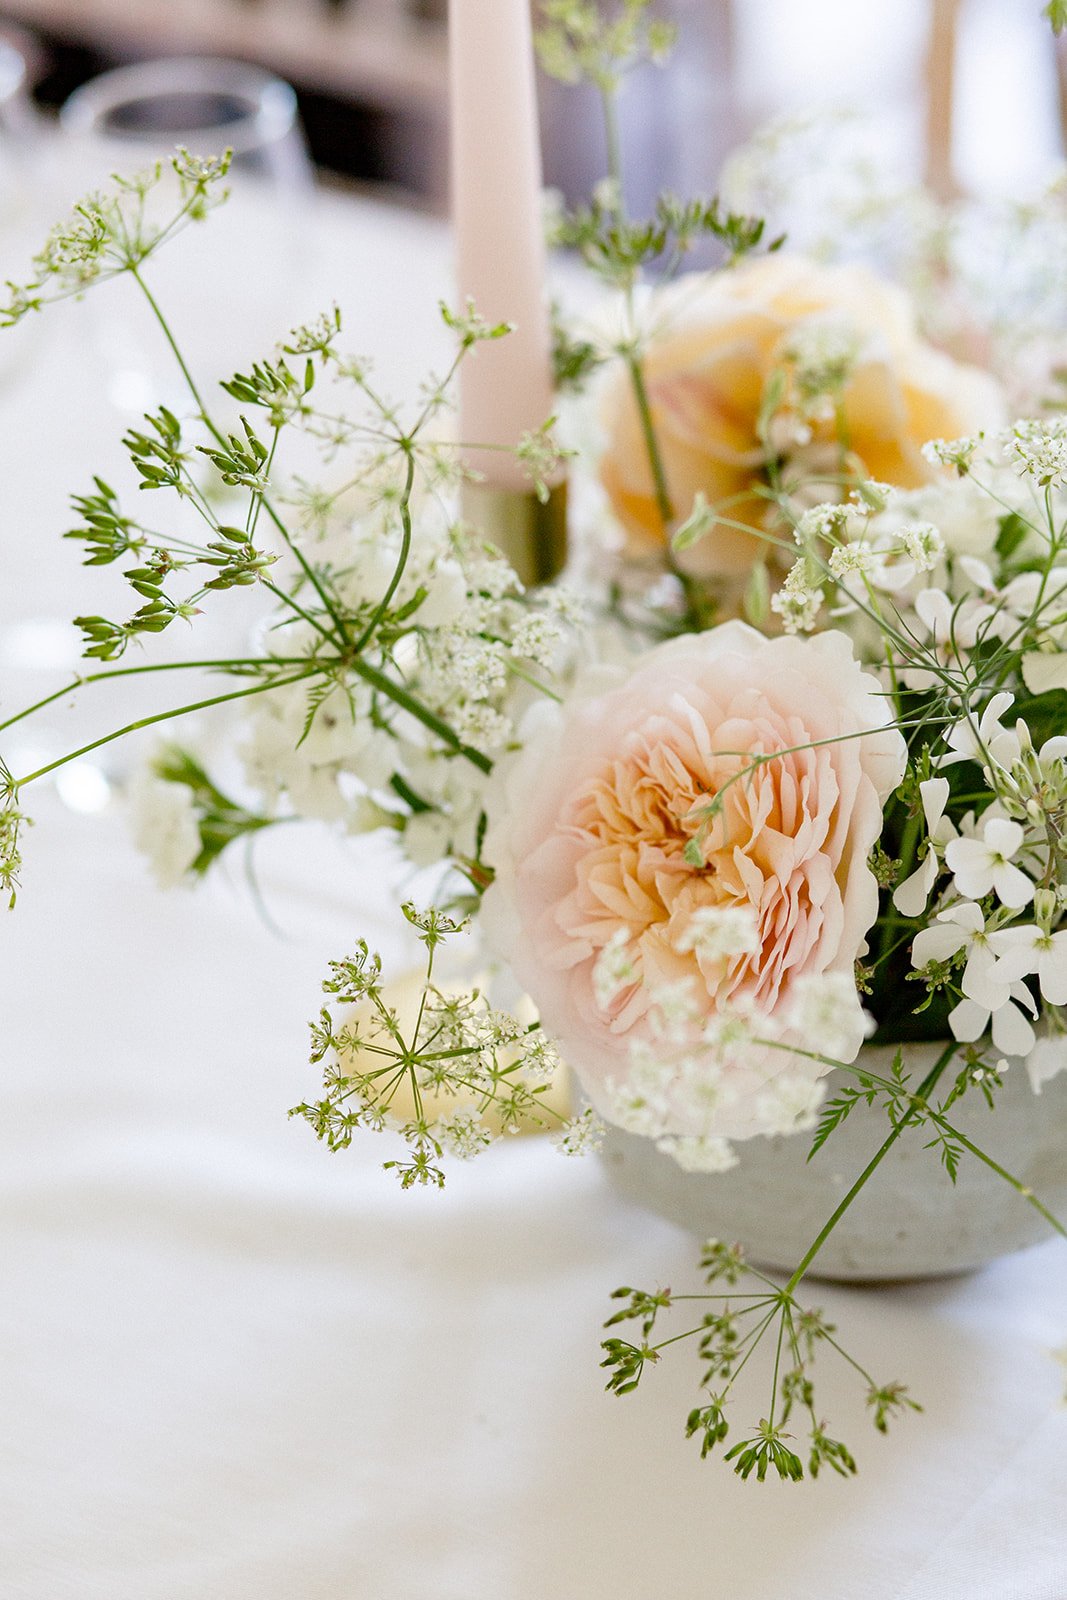 Roses table arrangements for wedding